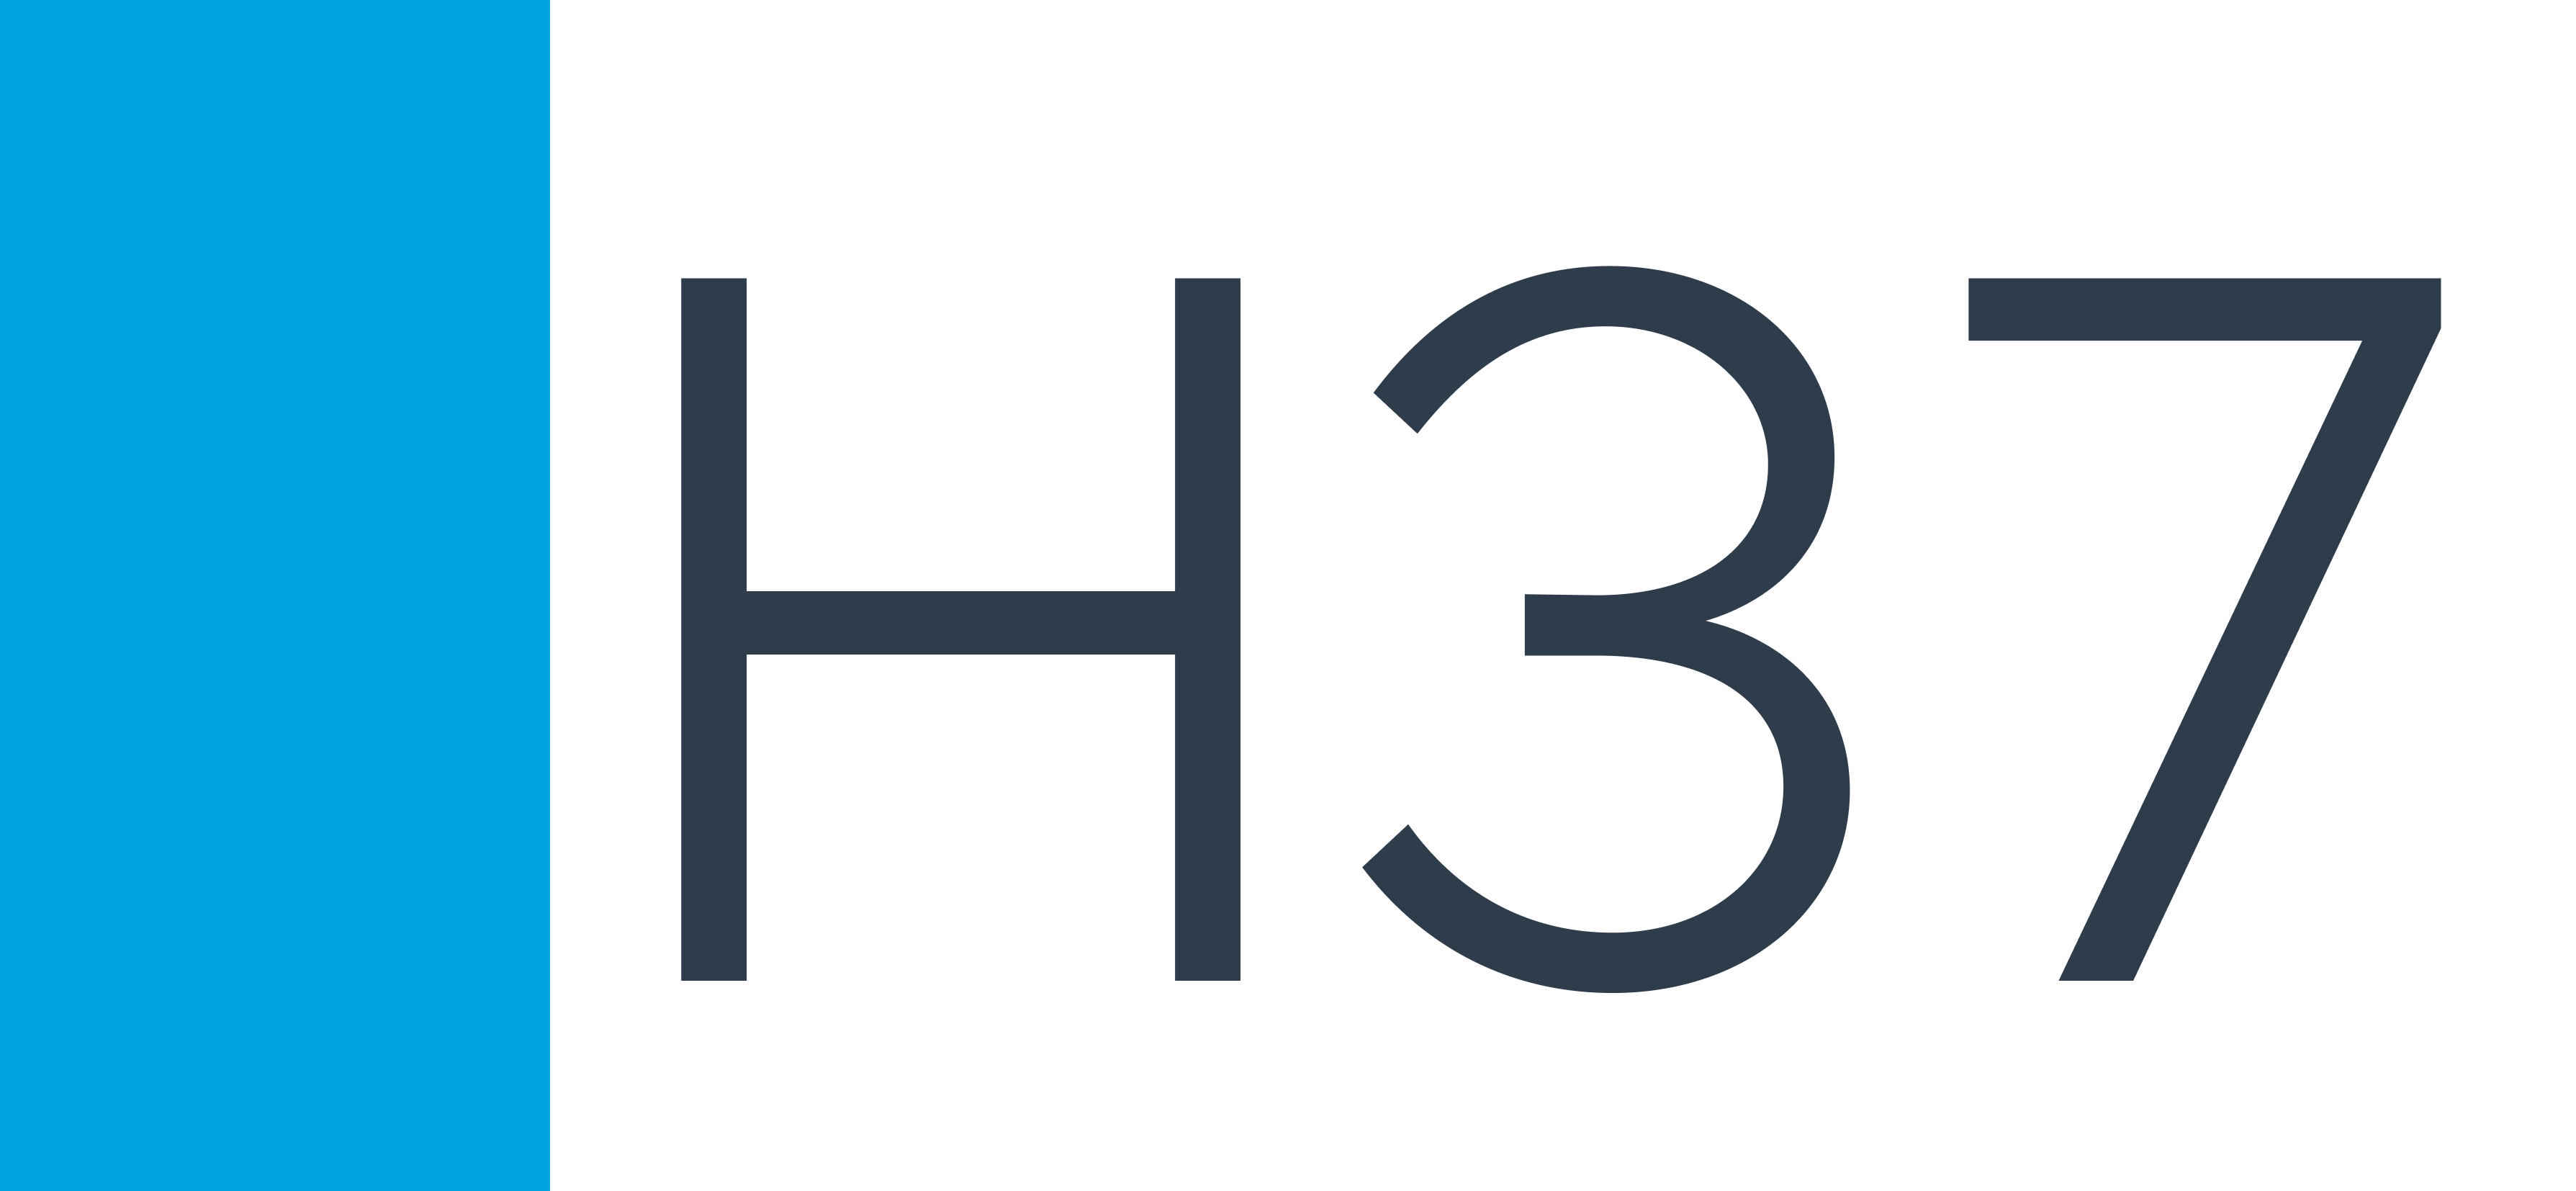 H37